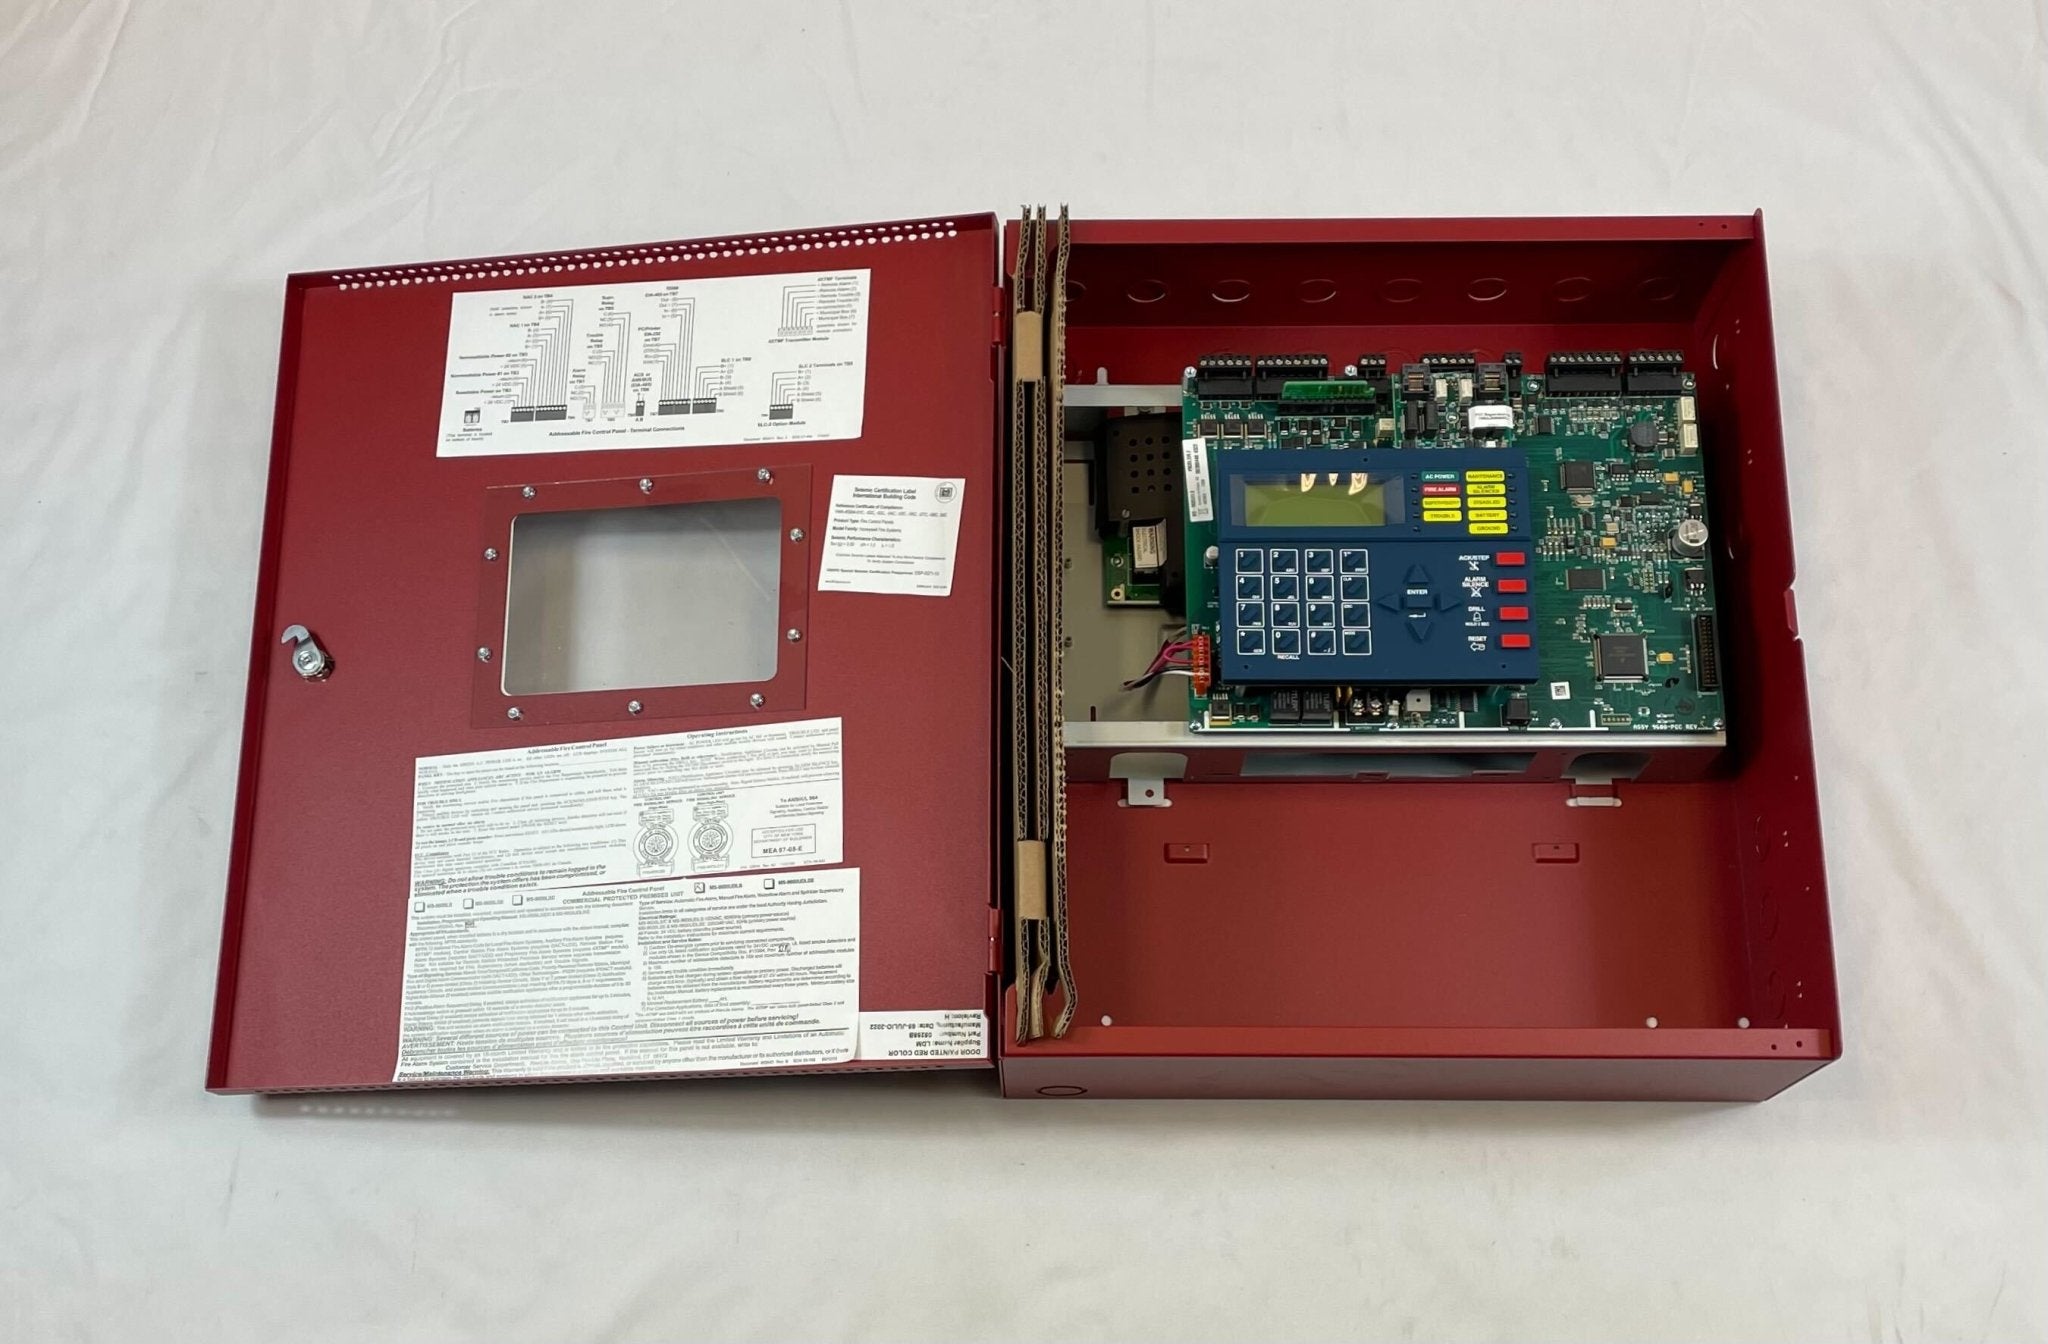 Firelite MS-9600UDLS - The Fire Alarm Supplier